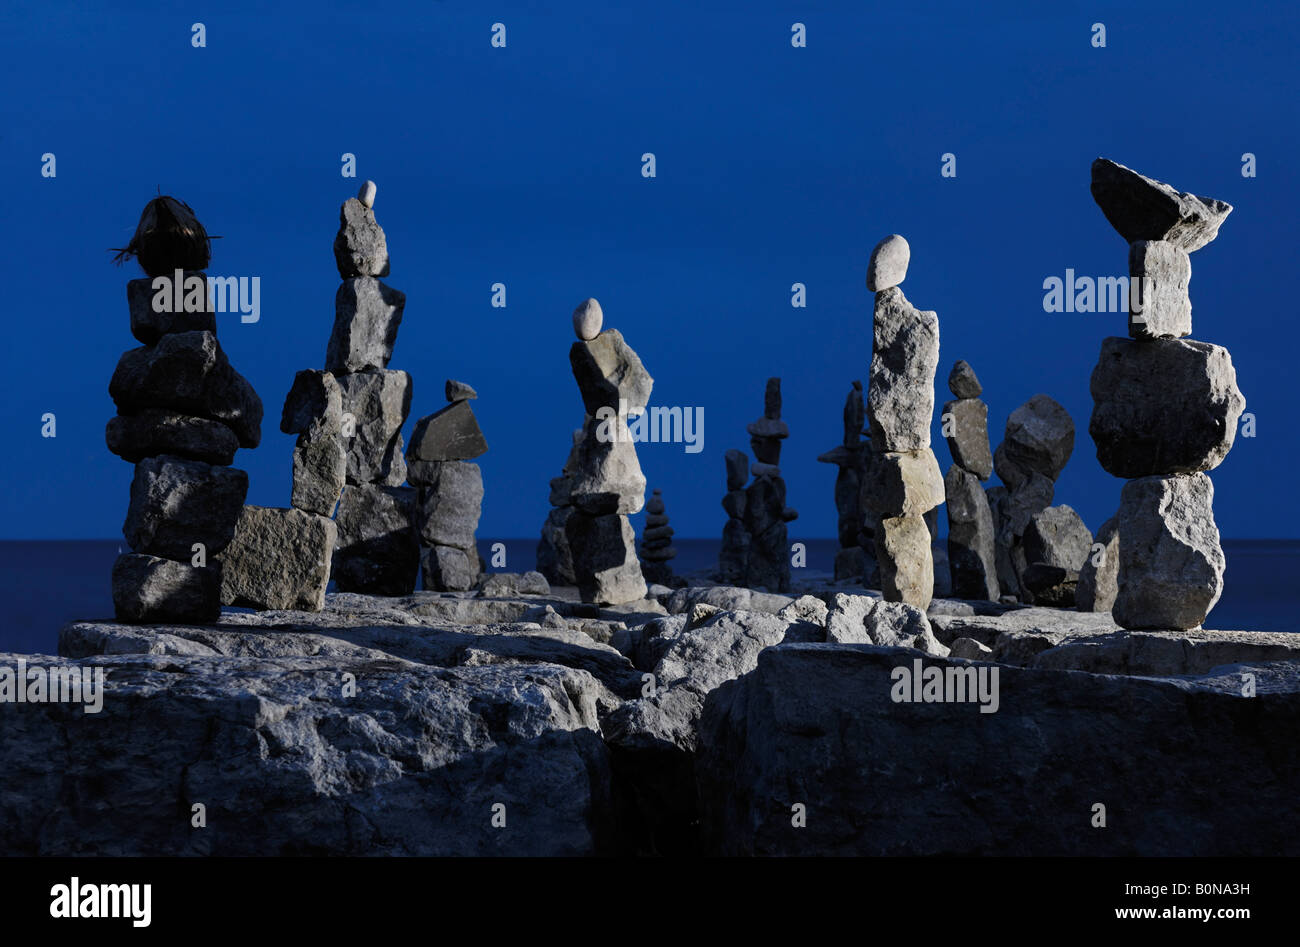 Stone human figures at night Inukshuk Inuit culture Stock Photo